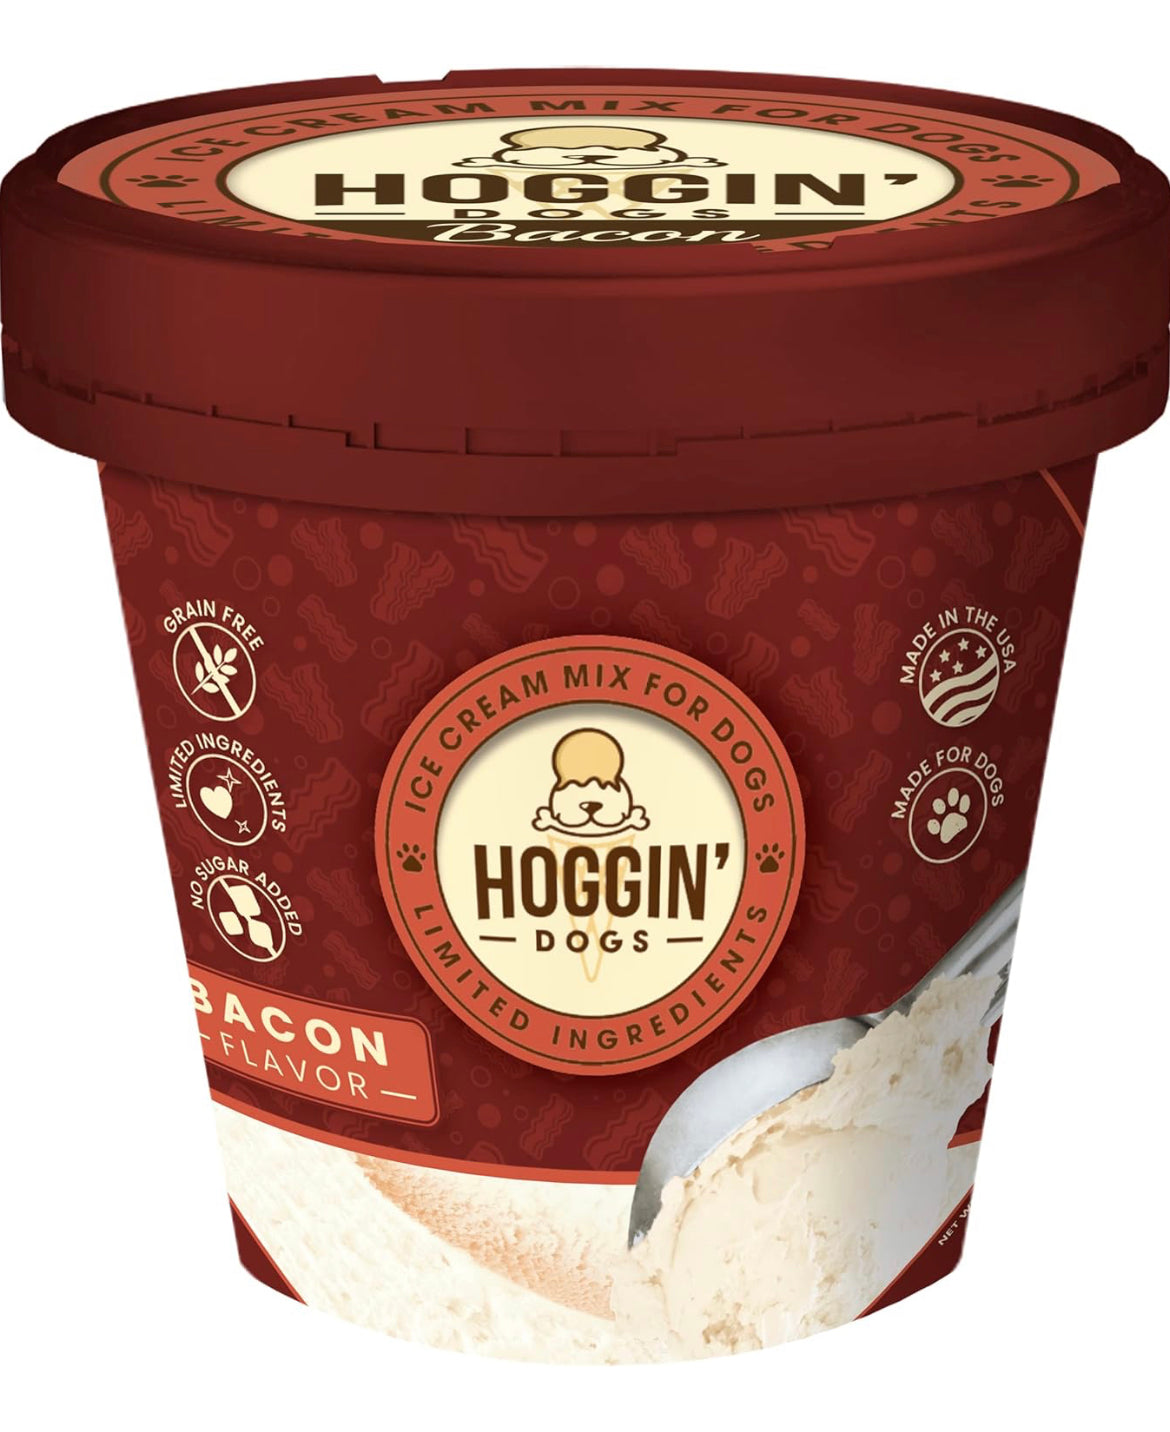 Hoggin Dogs Ice Cream